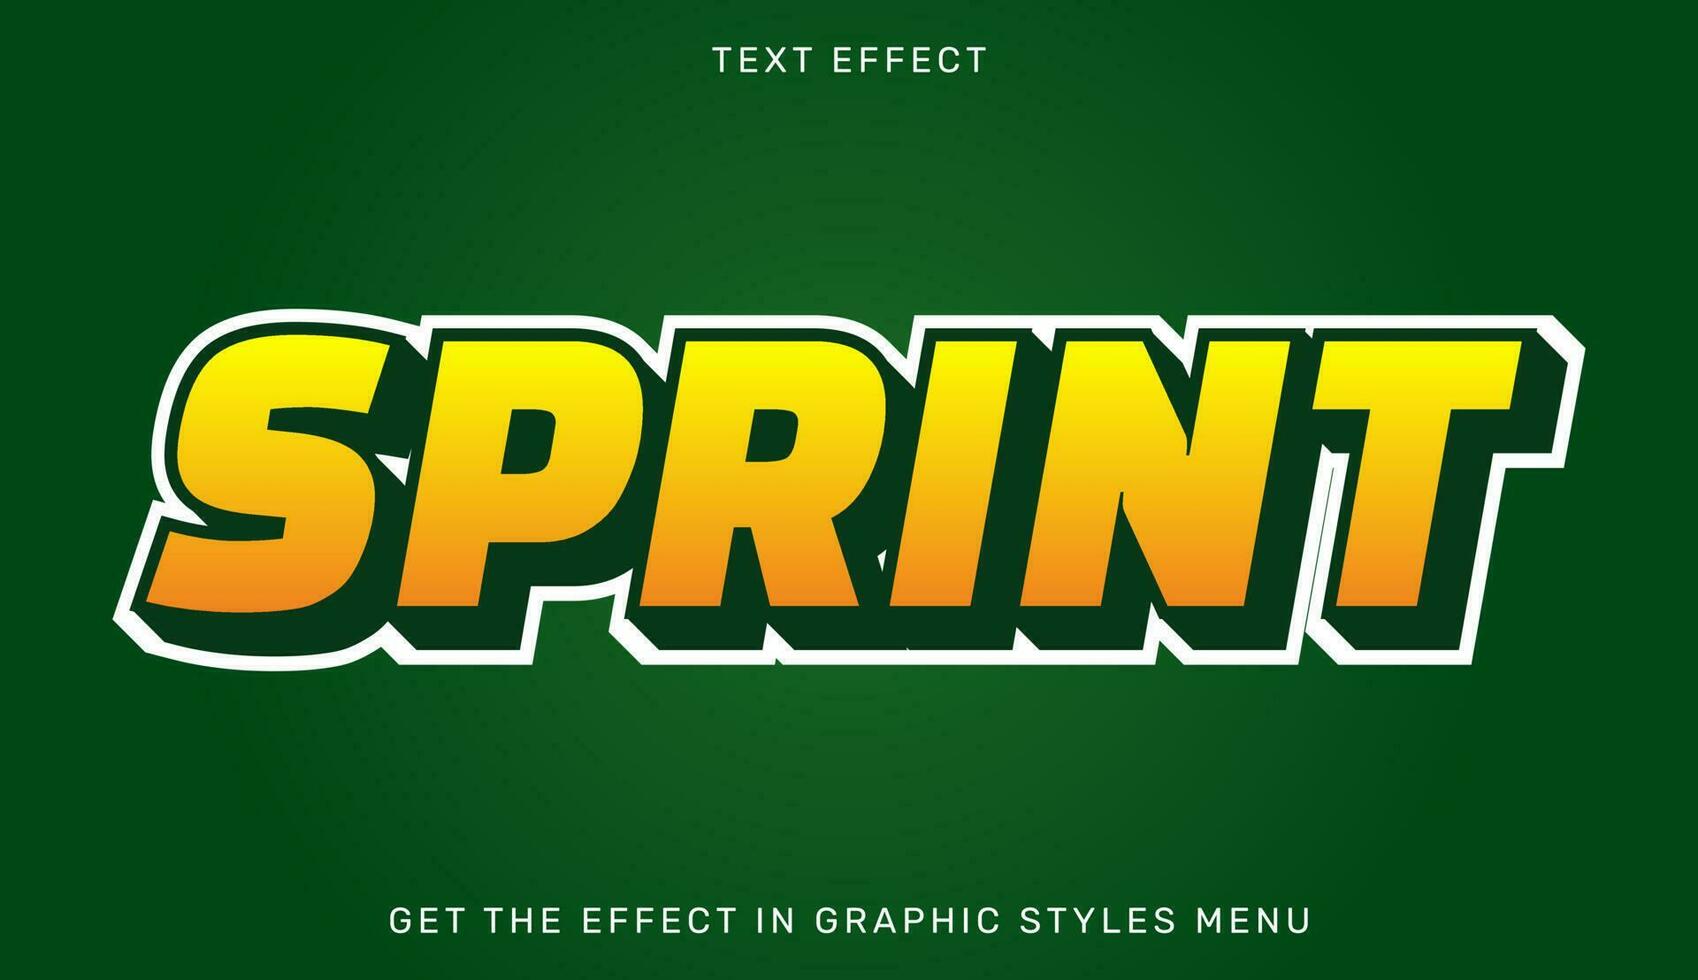 Sprint editable text effect in 3d style vector